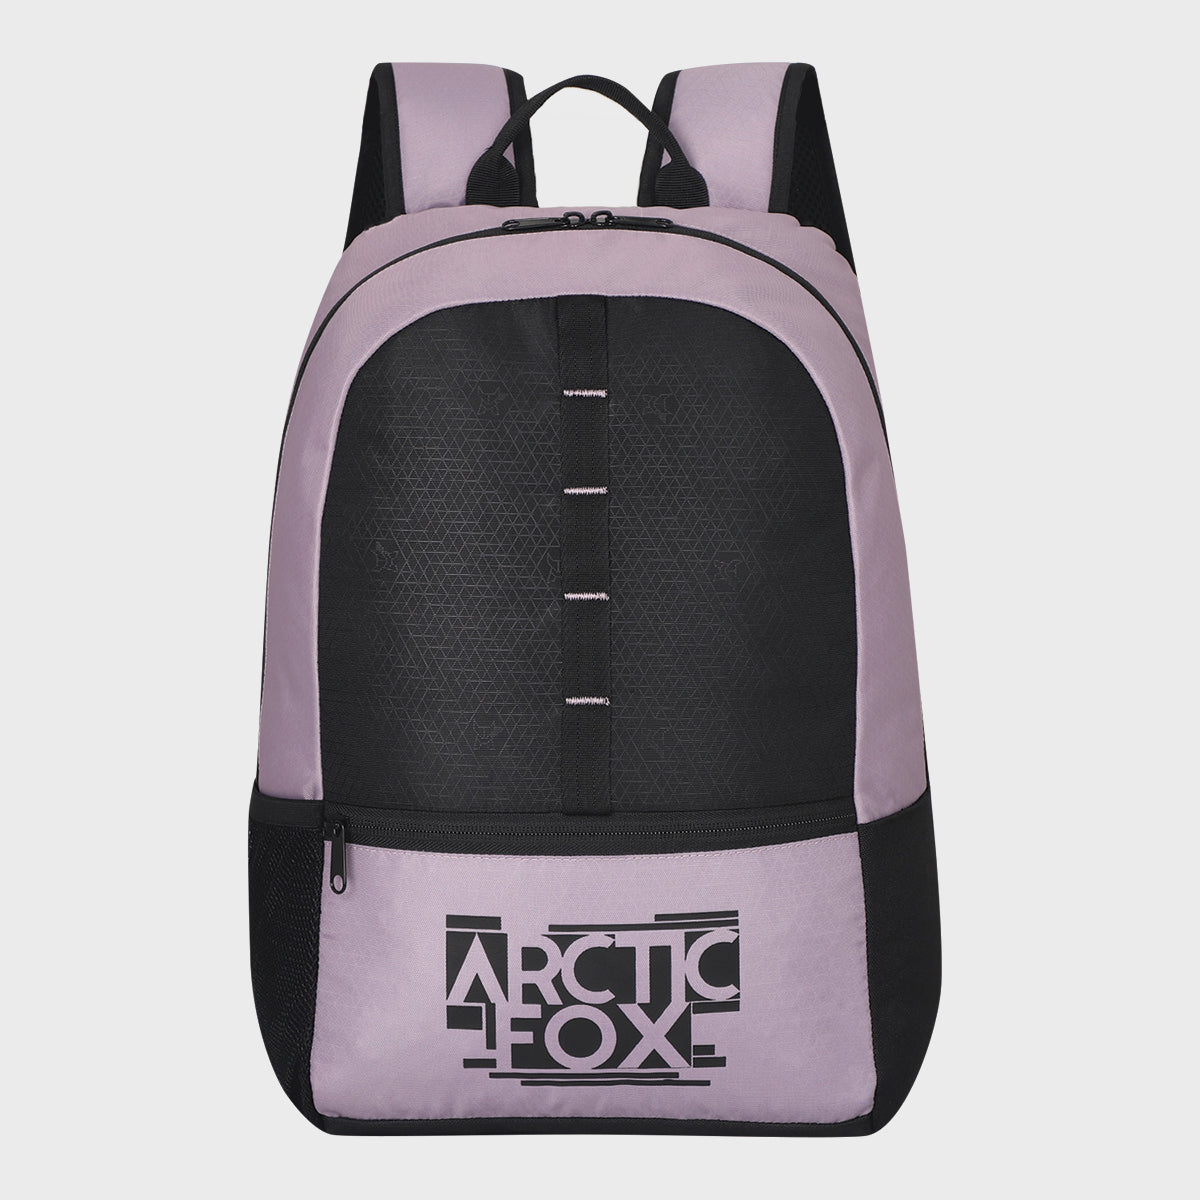 Arctic Fox Split Sea Fog Backpack